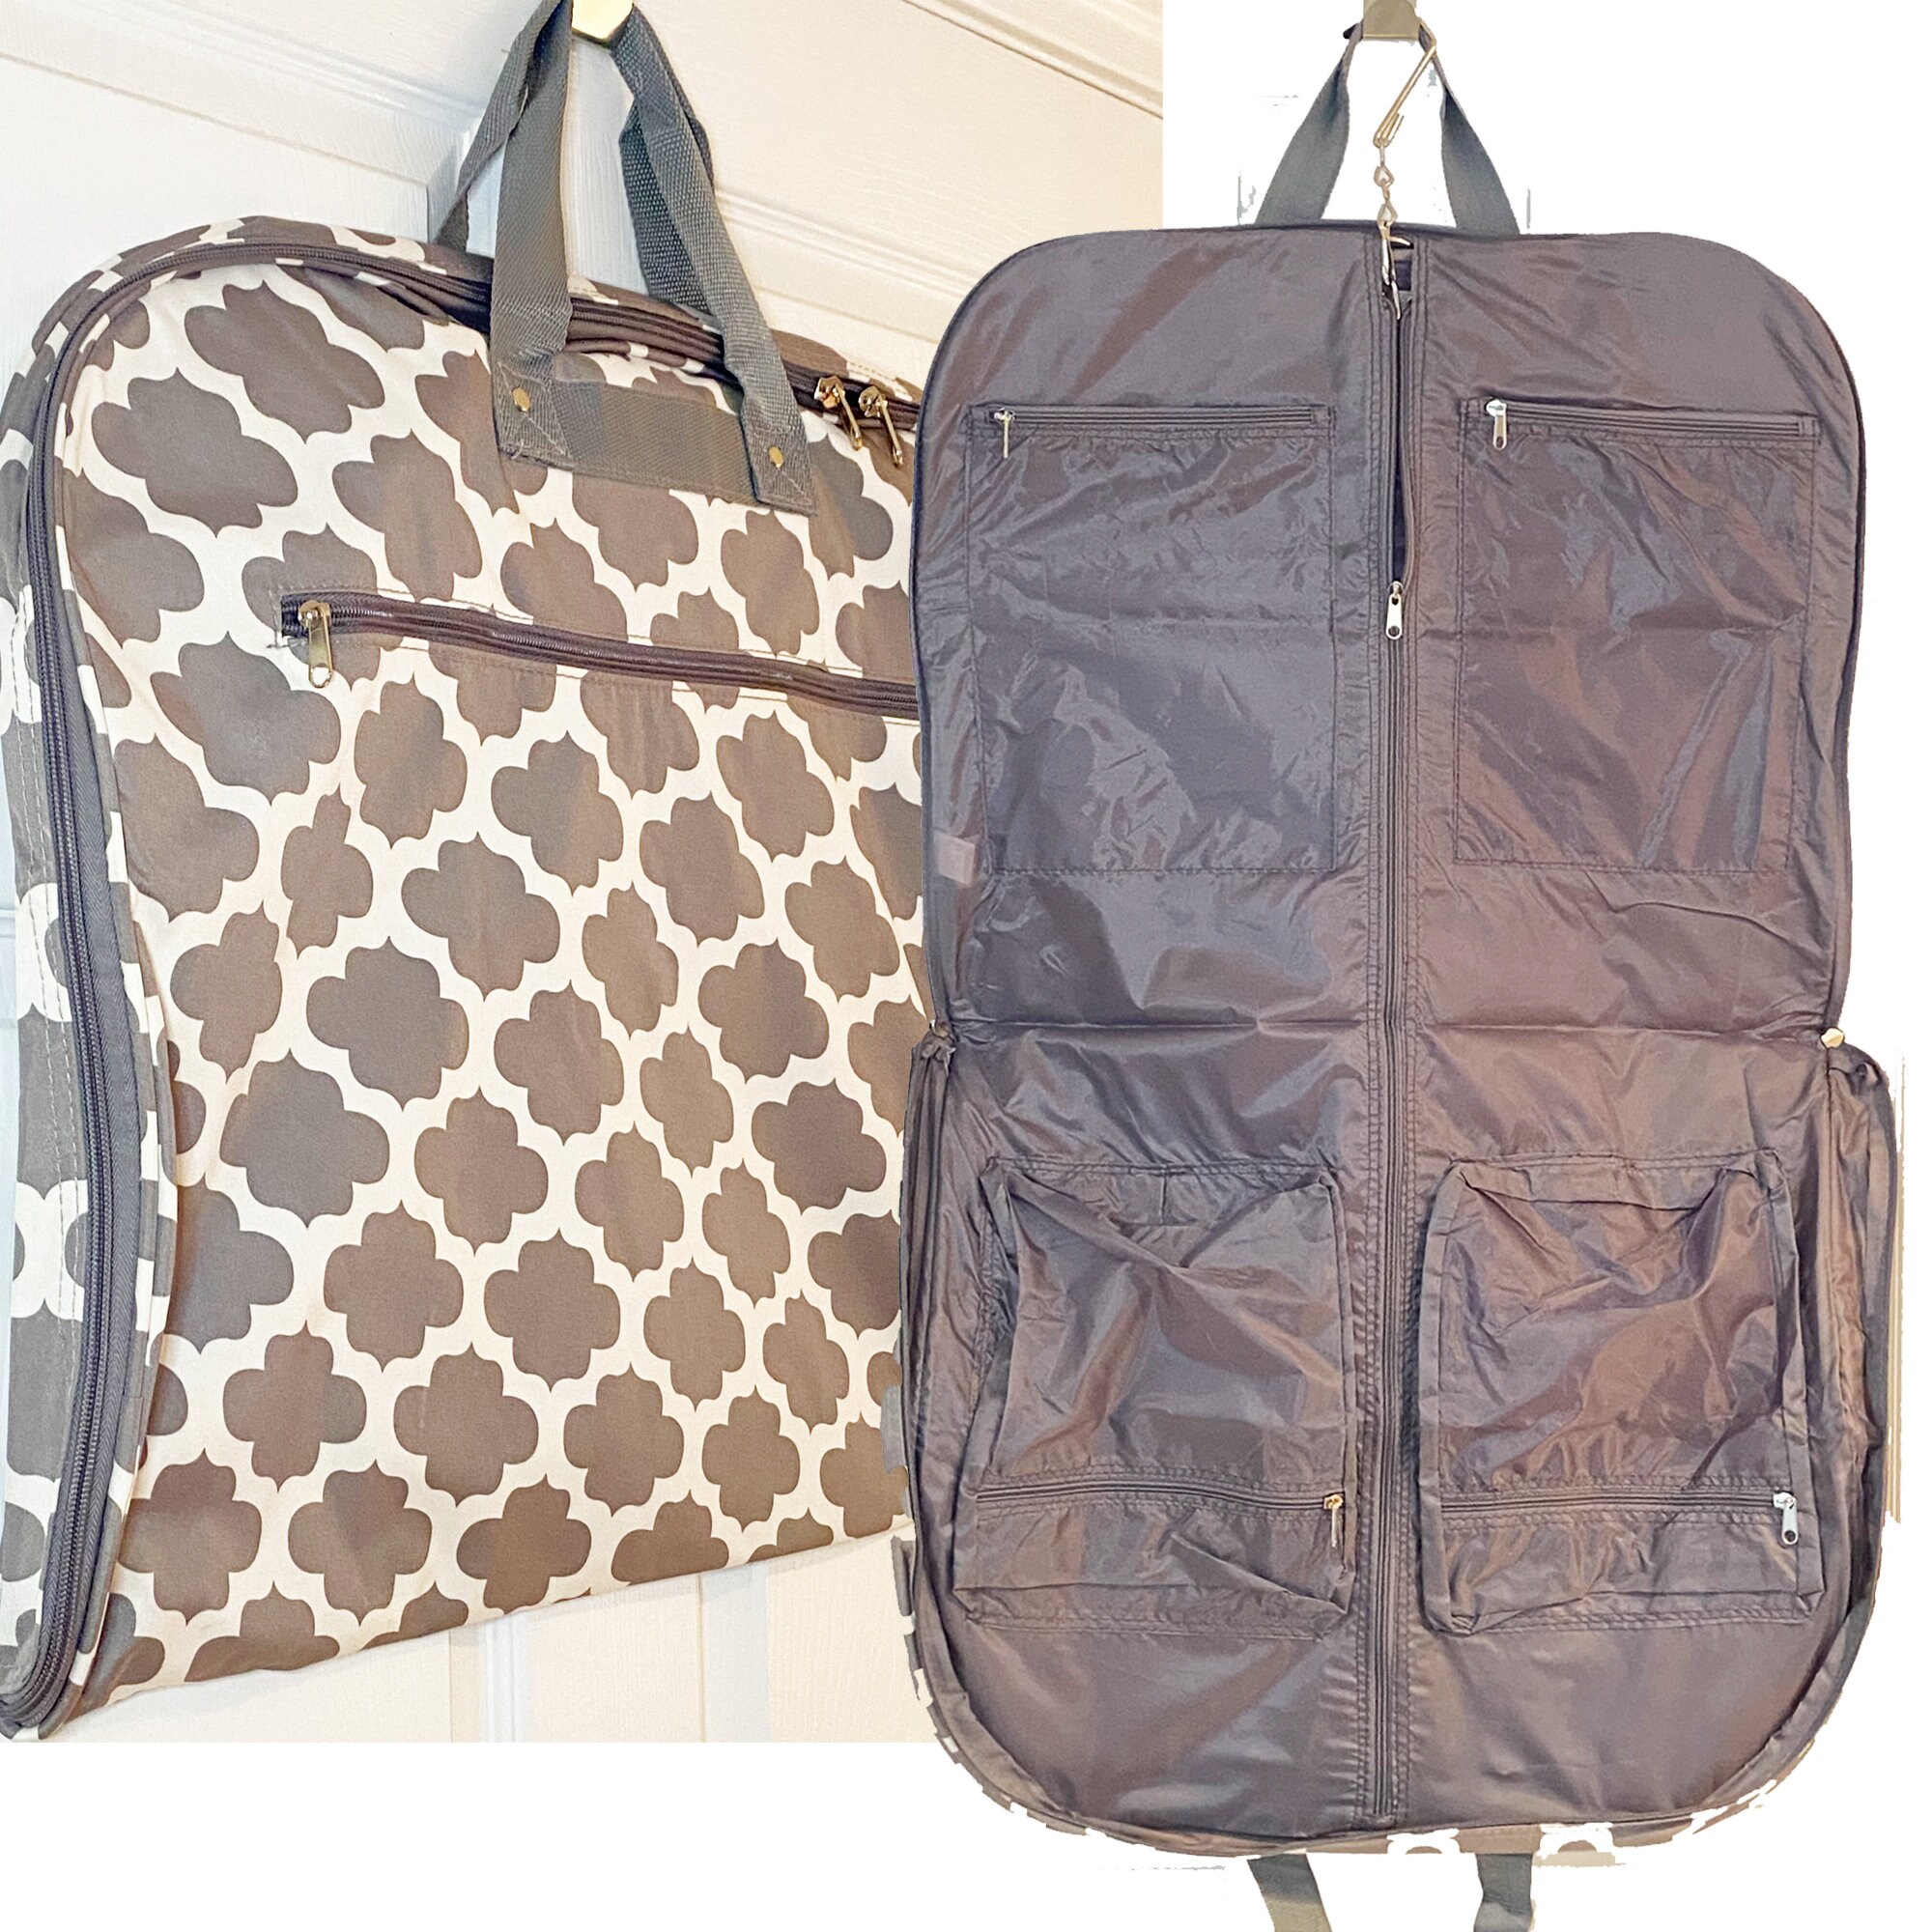 FOR HER Monogrammed Canvas Garment Bag - Black and White Bristol Tile -  FREE SHIP/Garment Bag / Monogrammed Garment Travel Bag/Teen Dress Bag/Dress